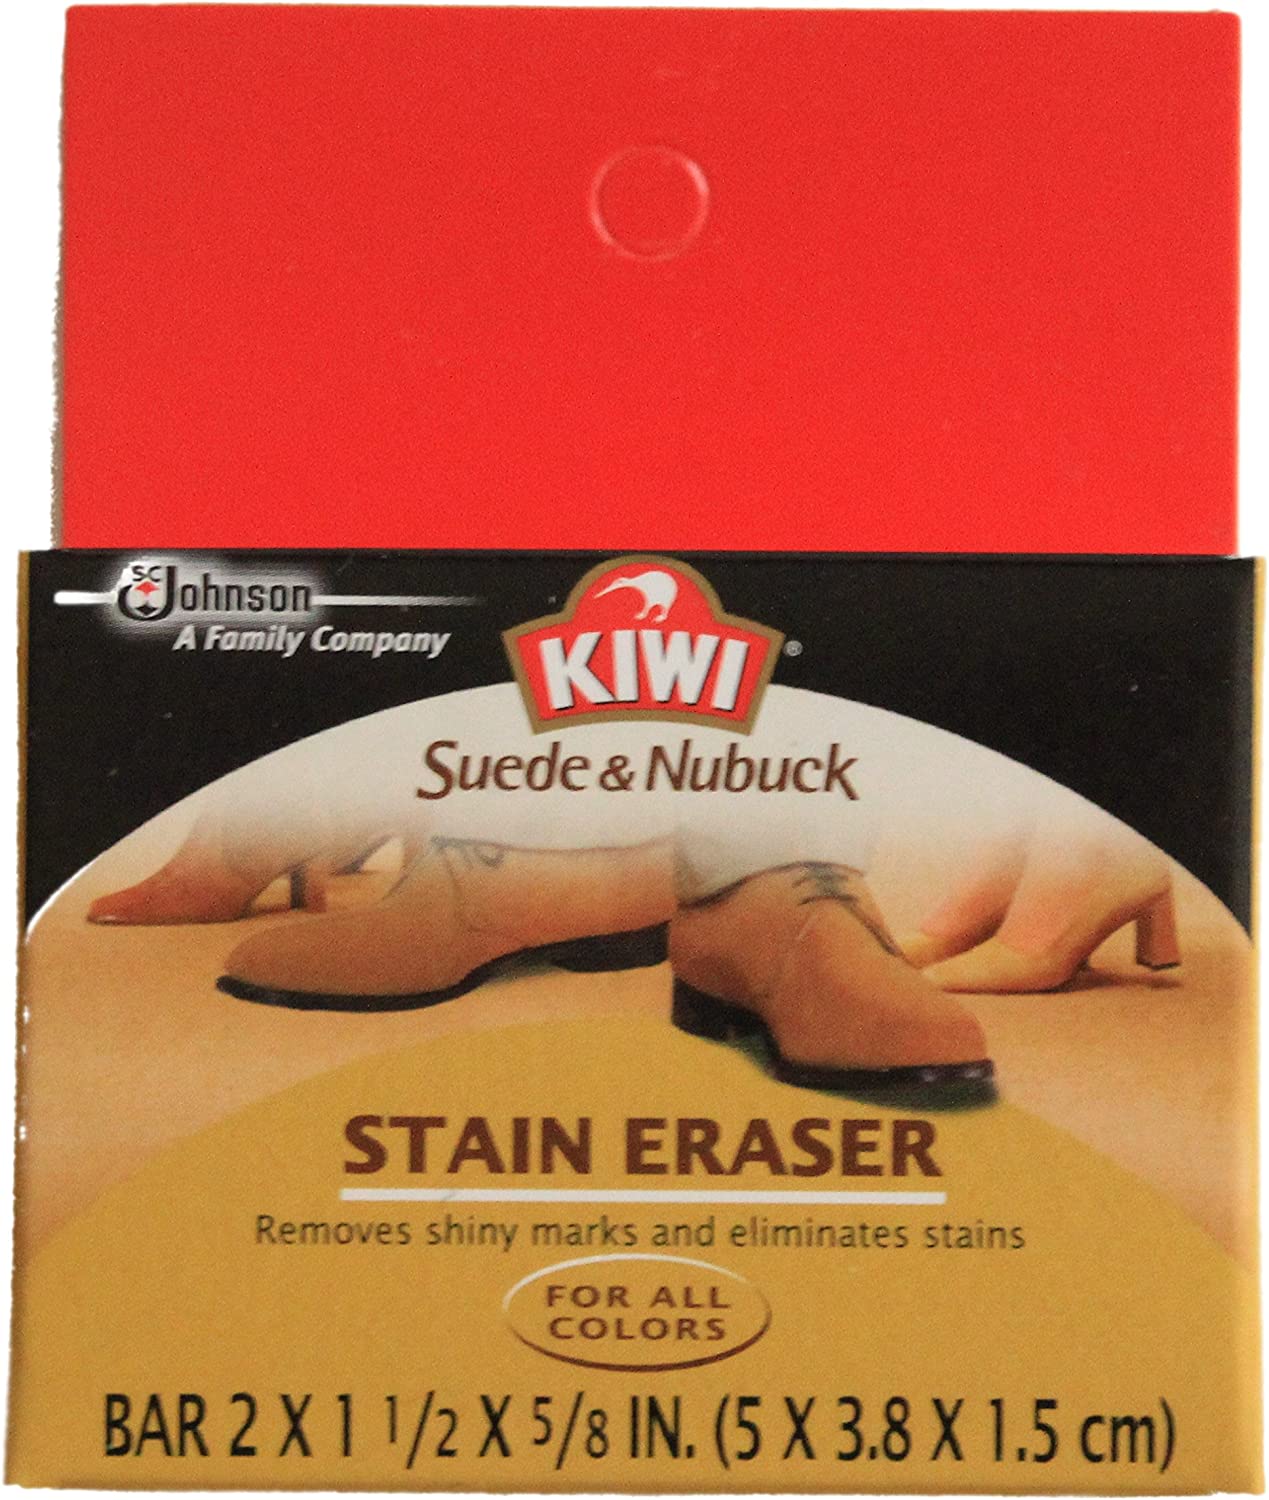 Kiwi Stain Eraser Suede y Nubuck